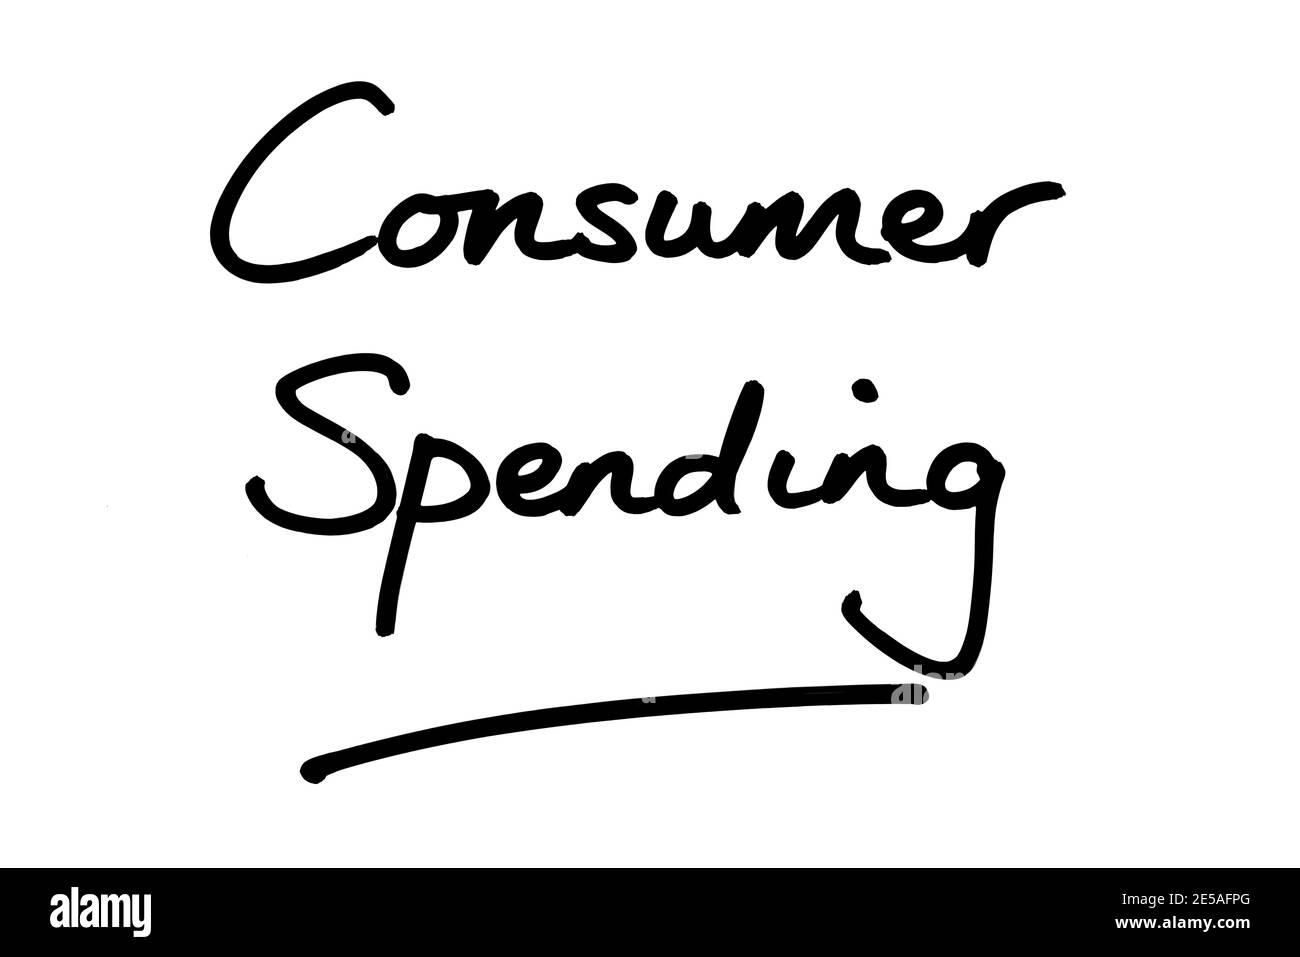 Consumer Spending, handwritten on a white background. Stock Photo